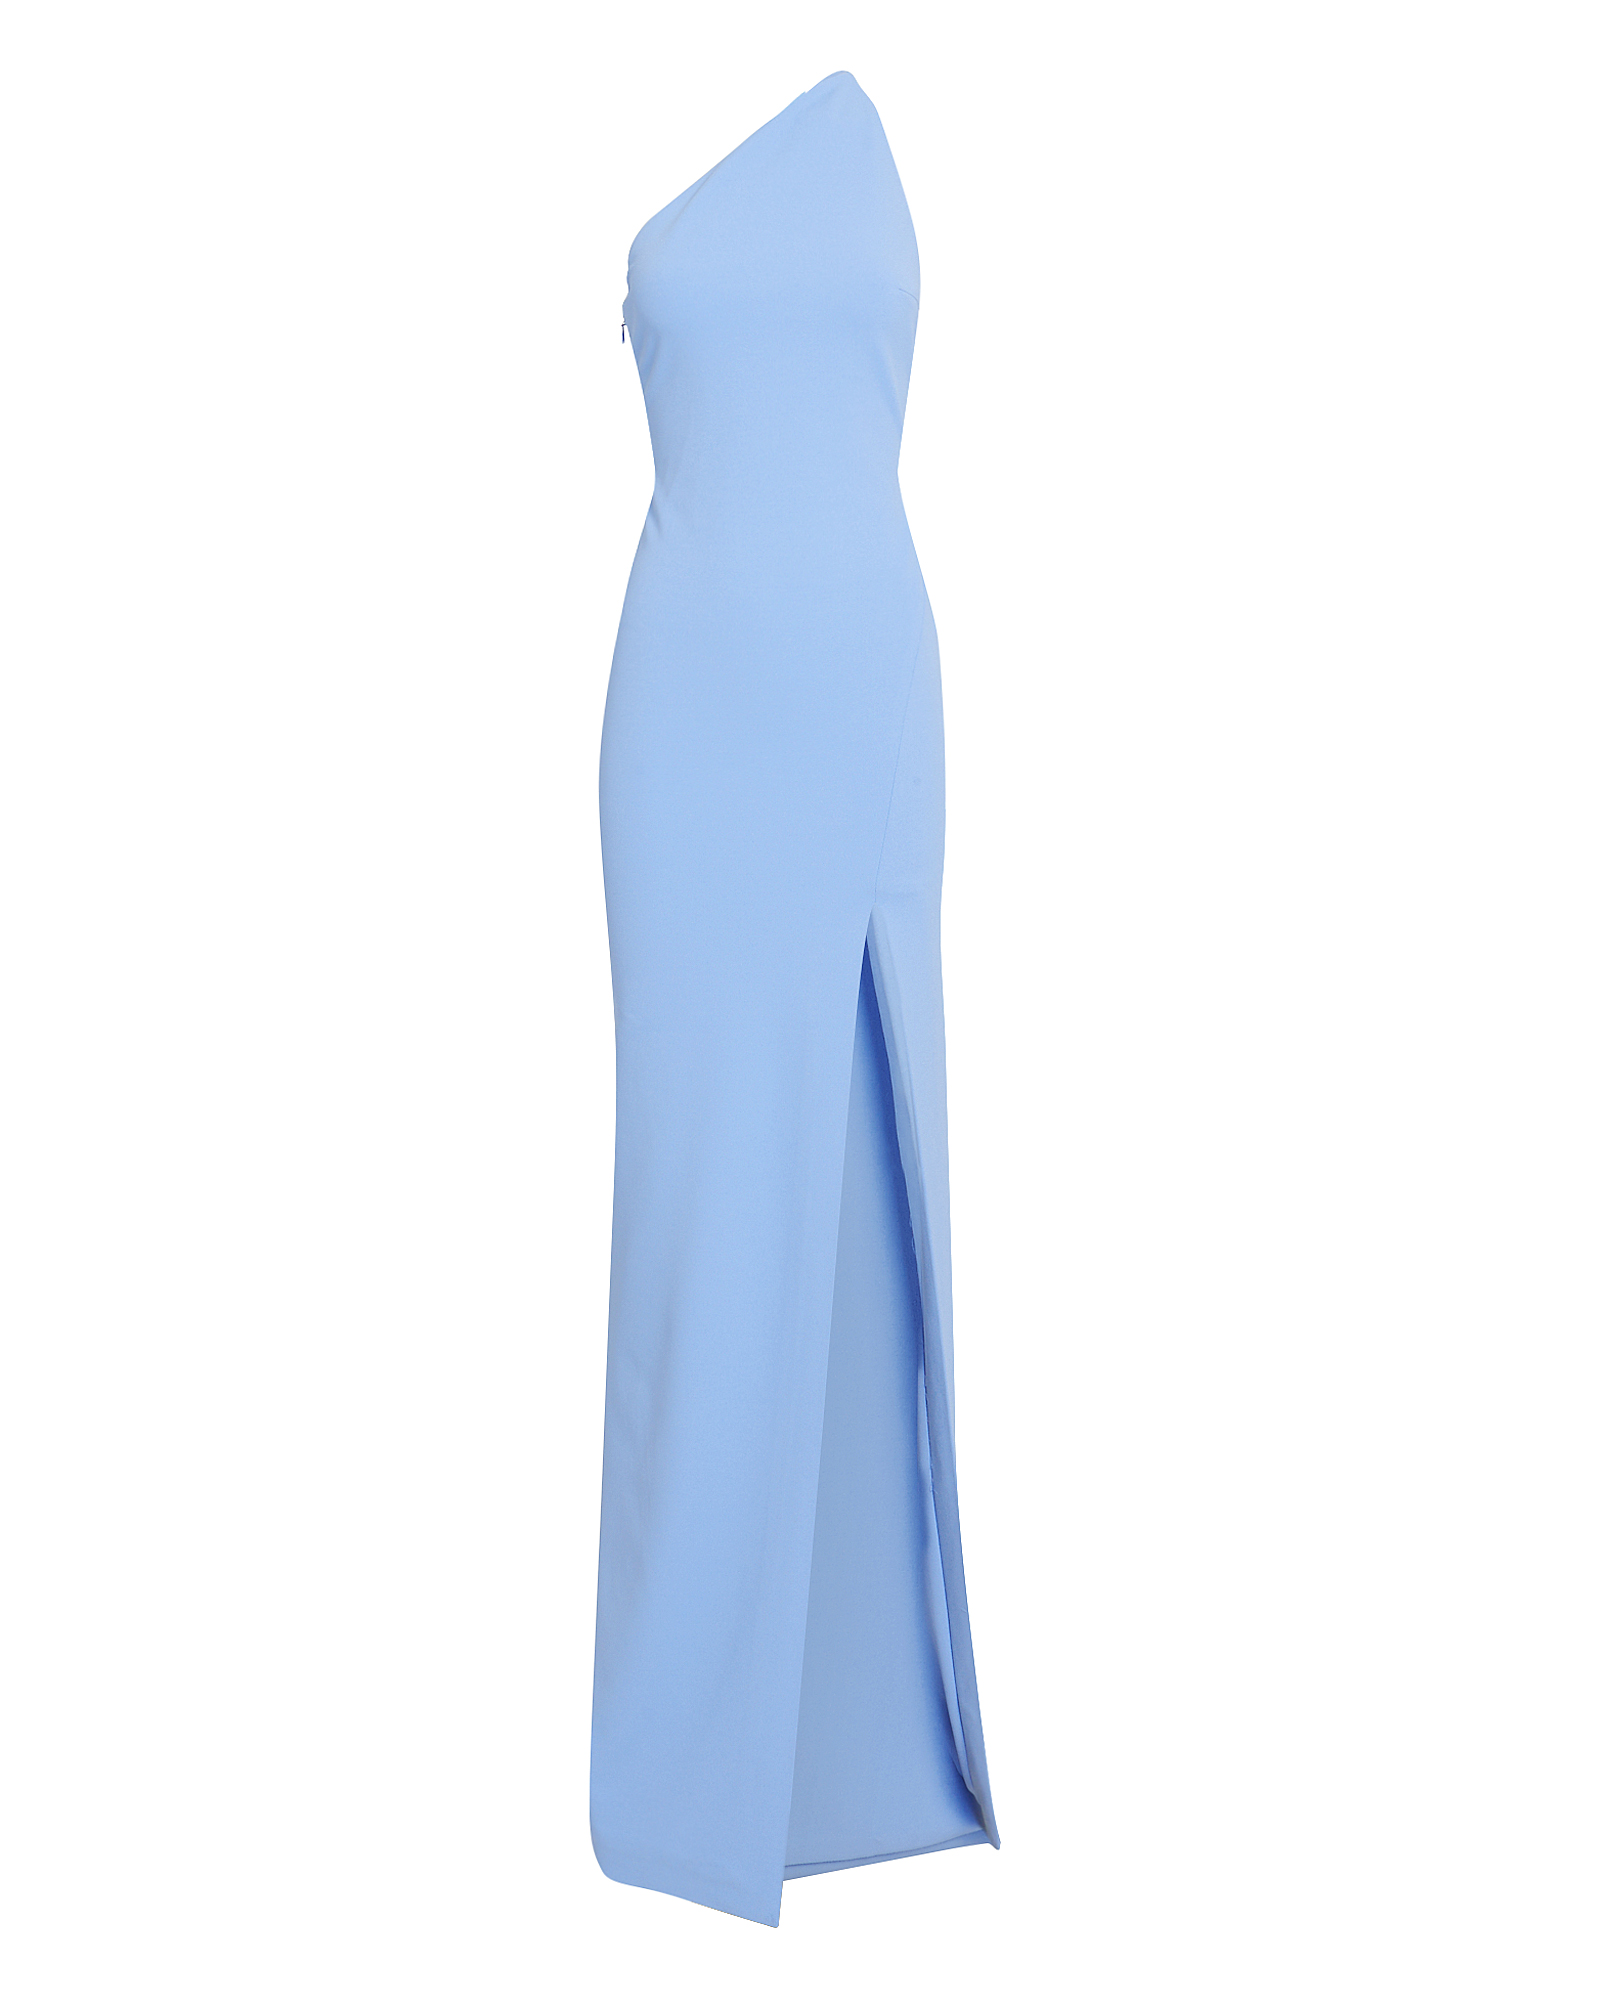 solace london petch blue gown